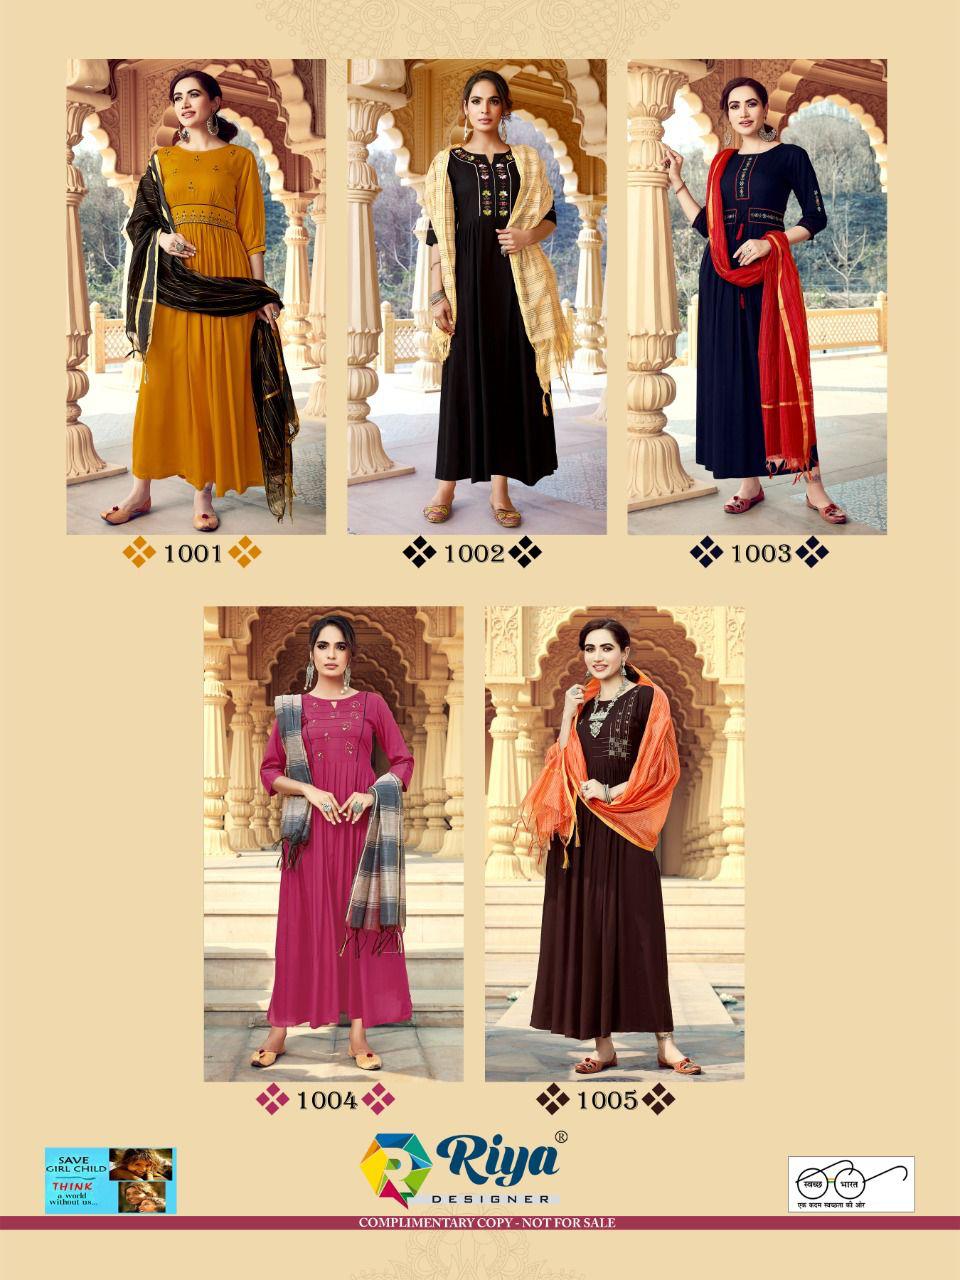 riya designer Ghoomar rayon modern look top with dupatta catalog